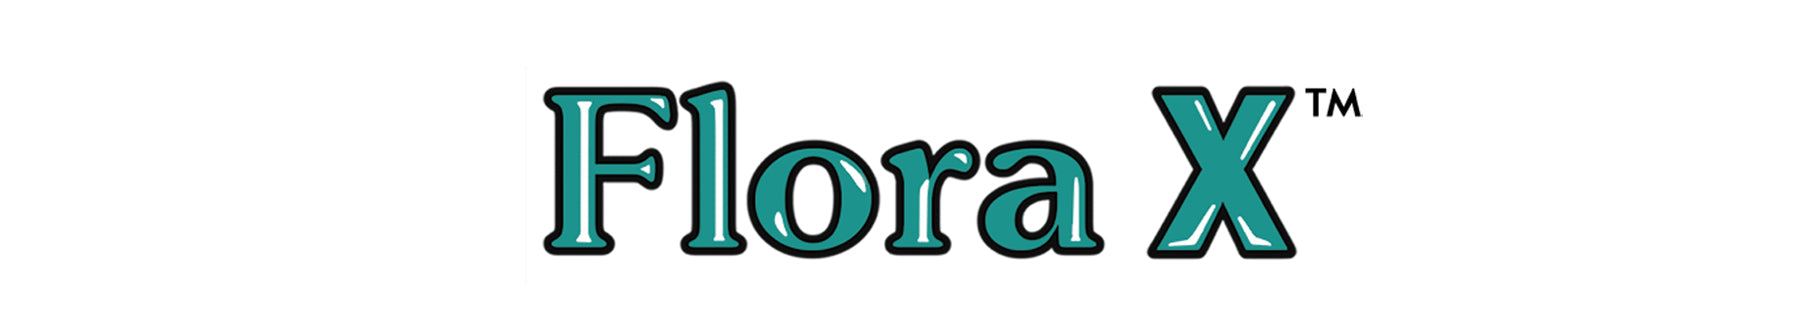 Flora X™ Logo Image